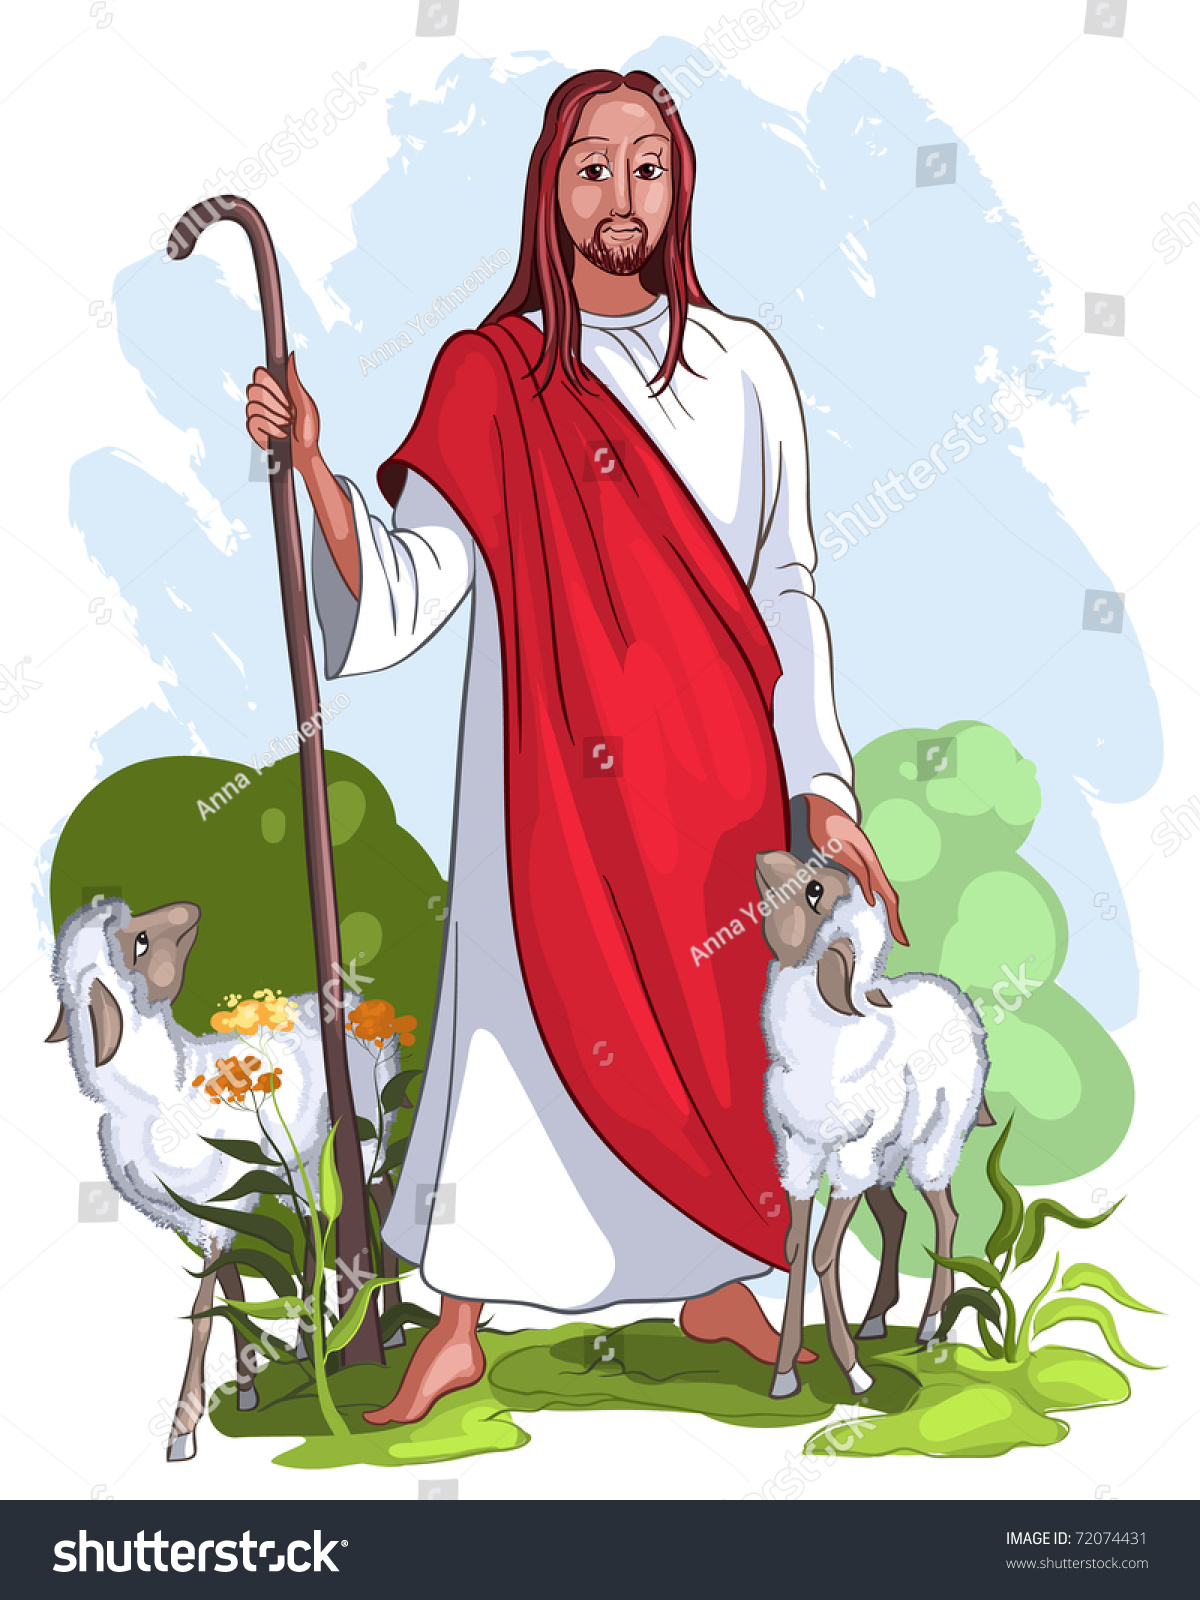 clipart jesus and lamb - photo #12